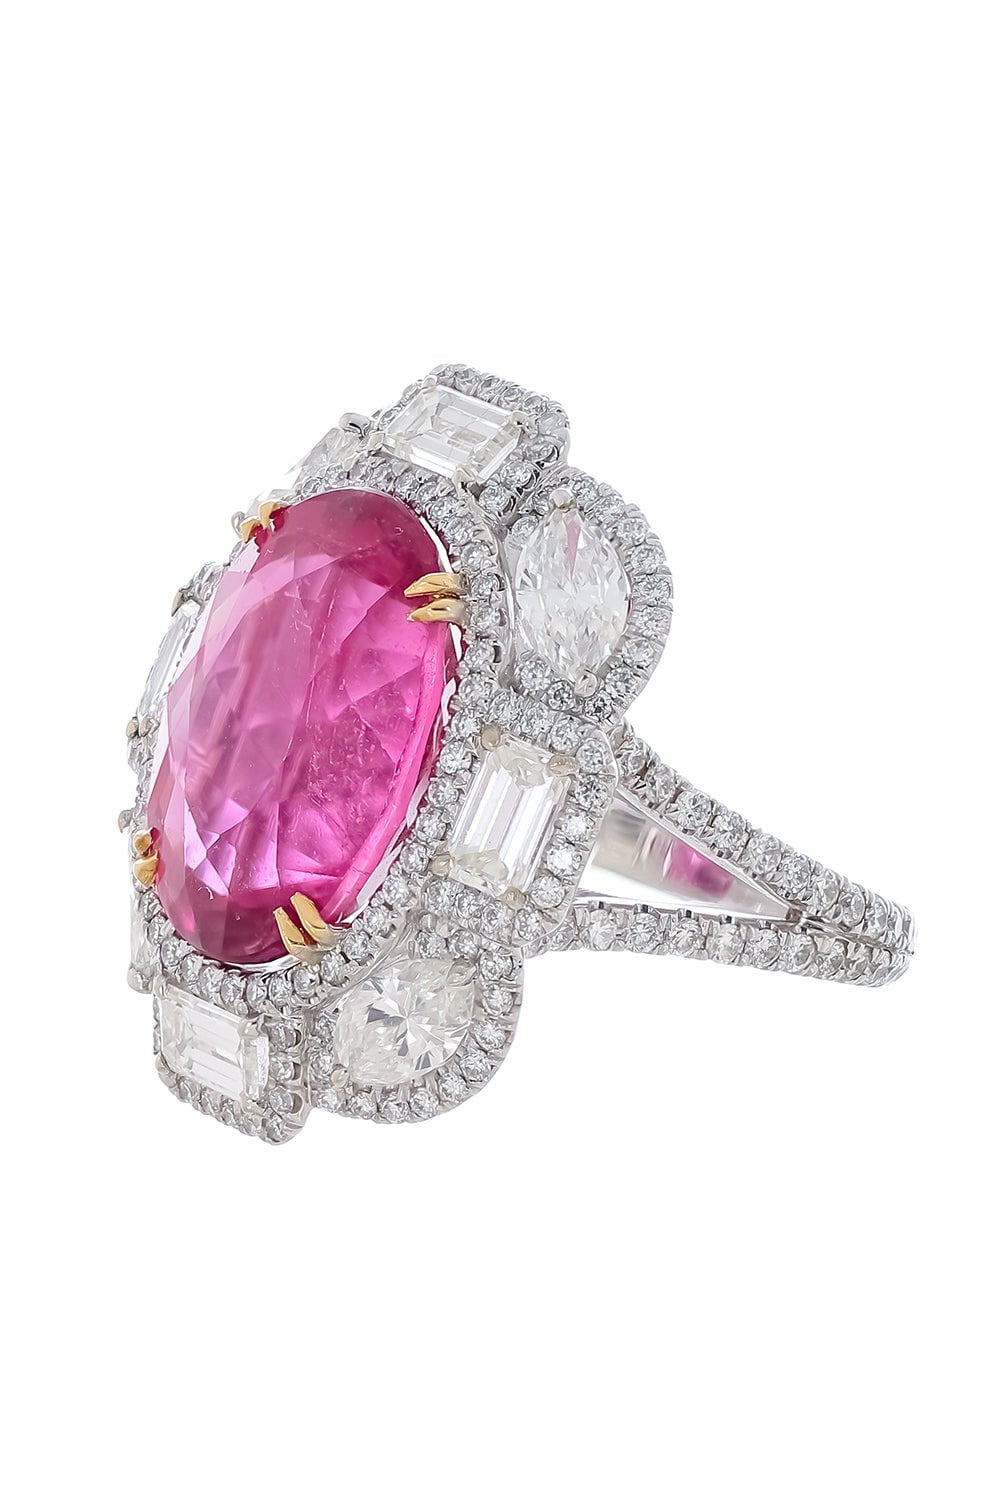 DIANA M. JEWELS-Pink Turmaline Diamond Ring-PLATINUM